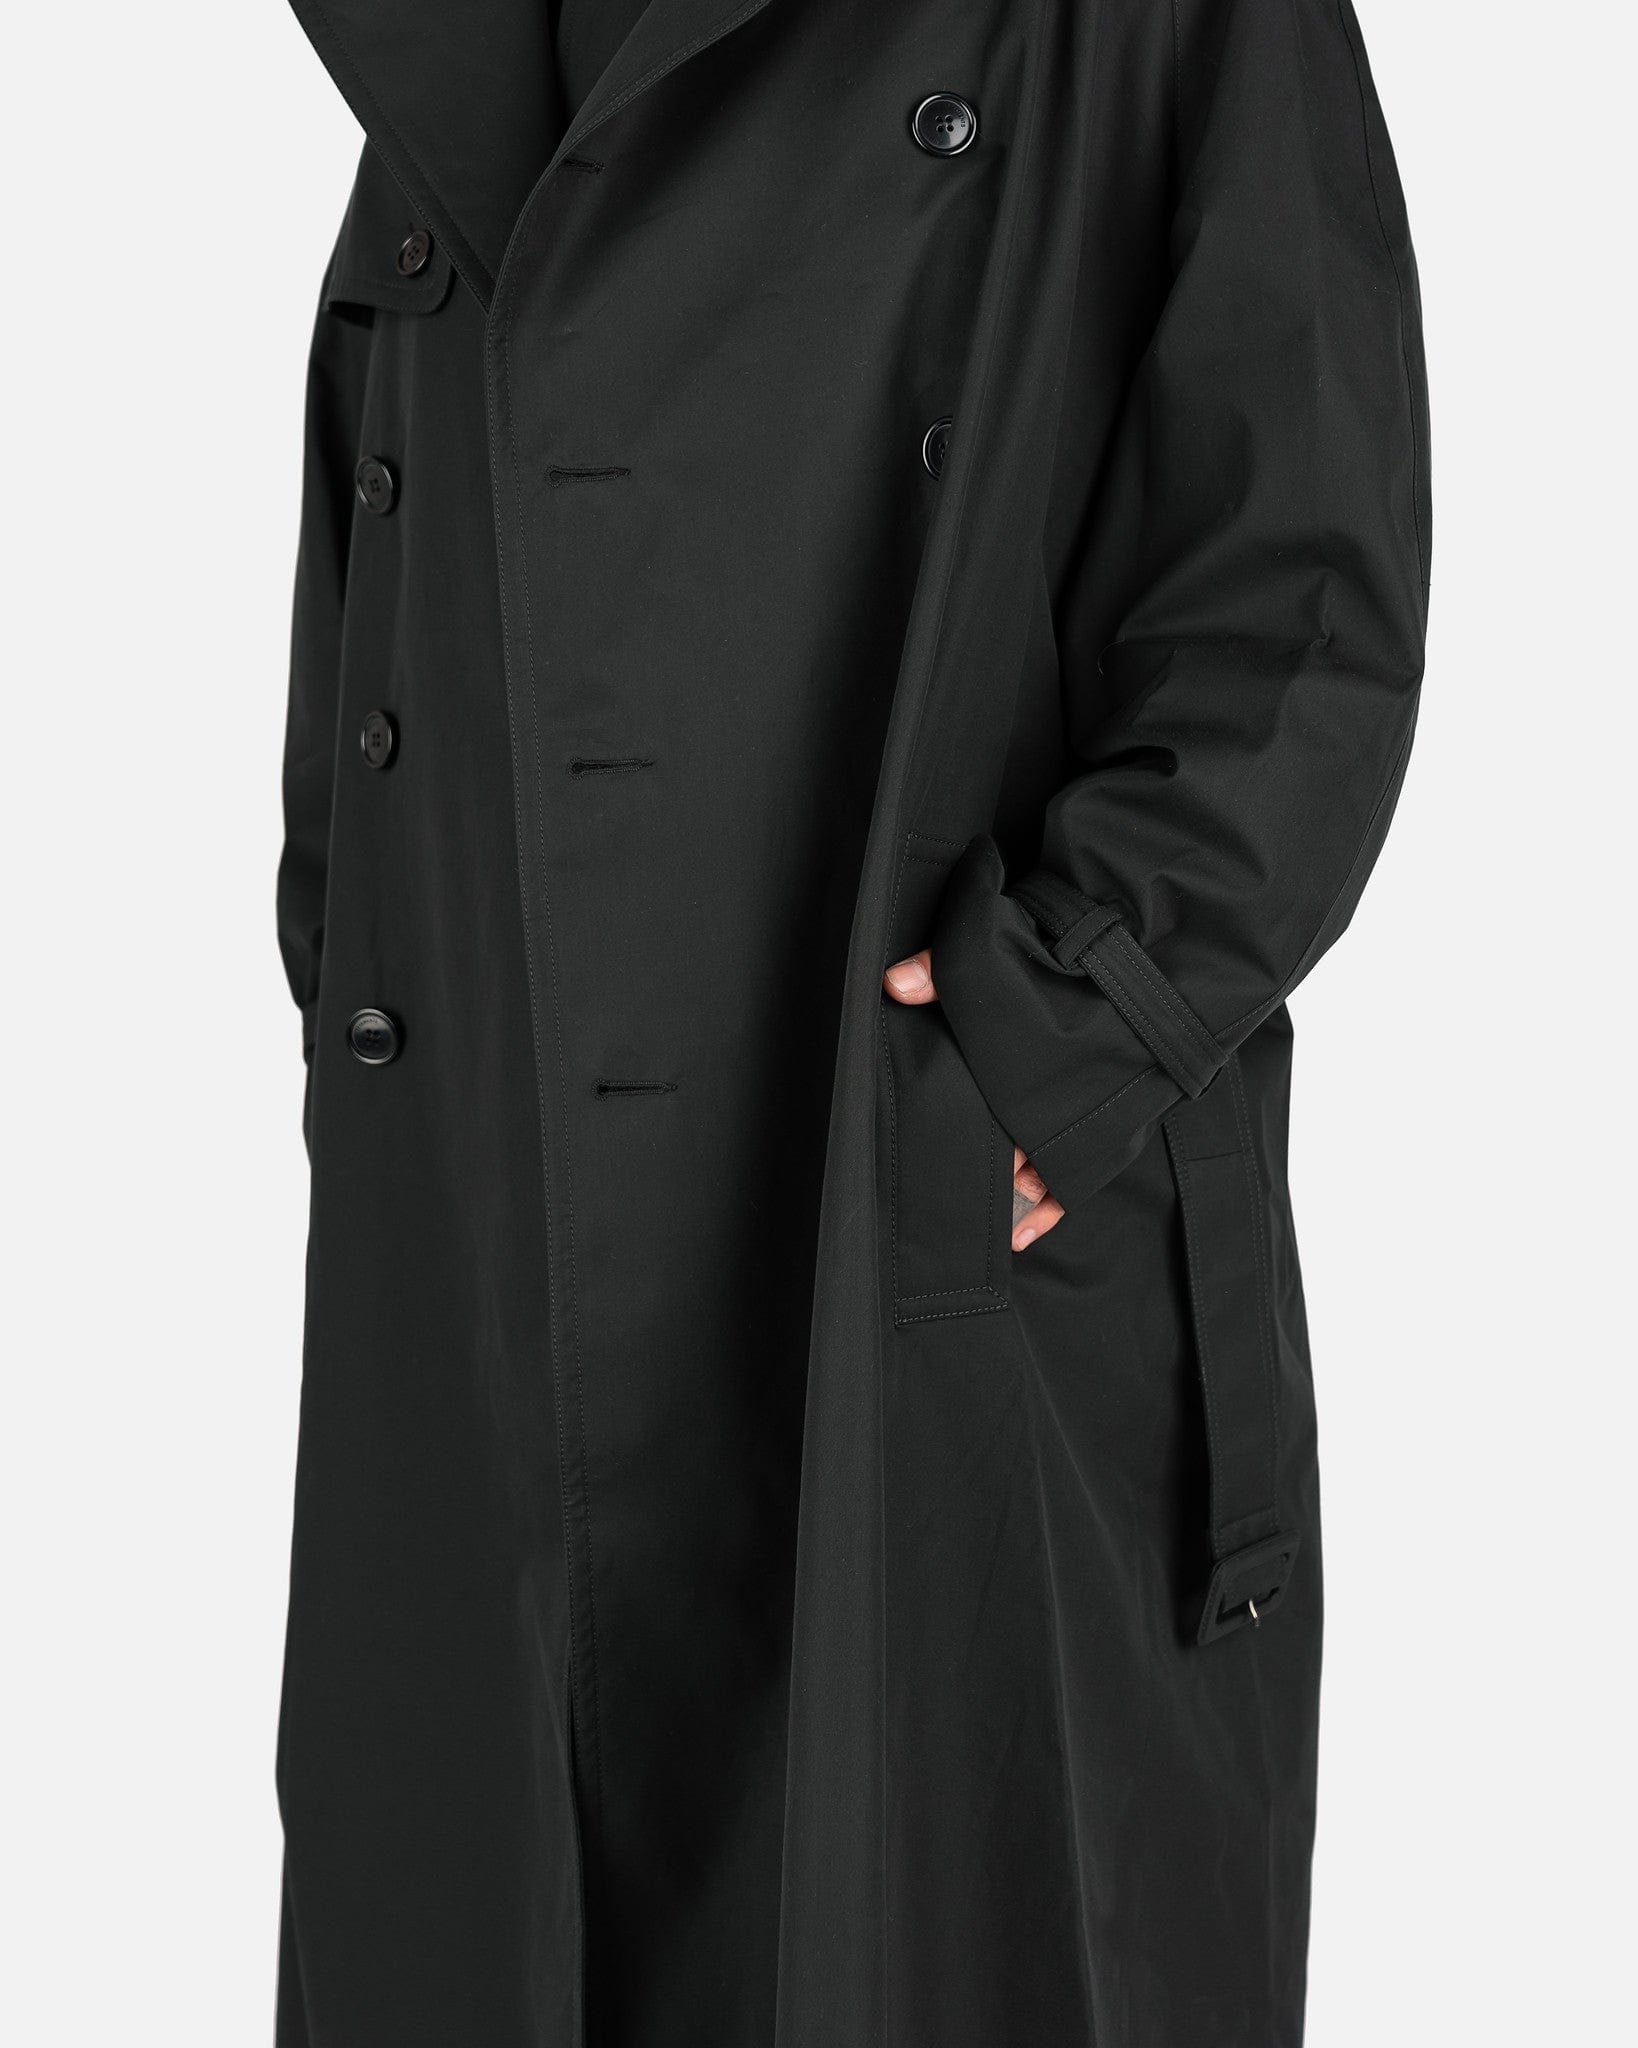 VETEMENTS Men's Coat Label Trench Coat in Black